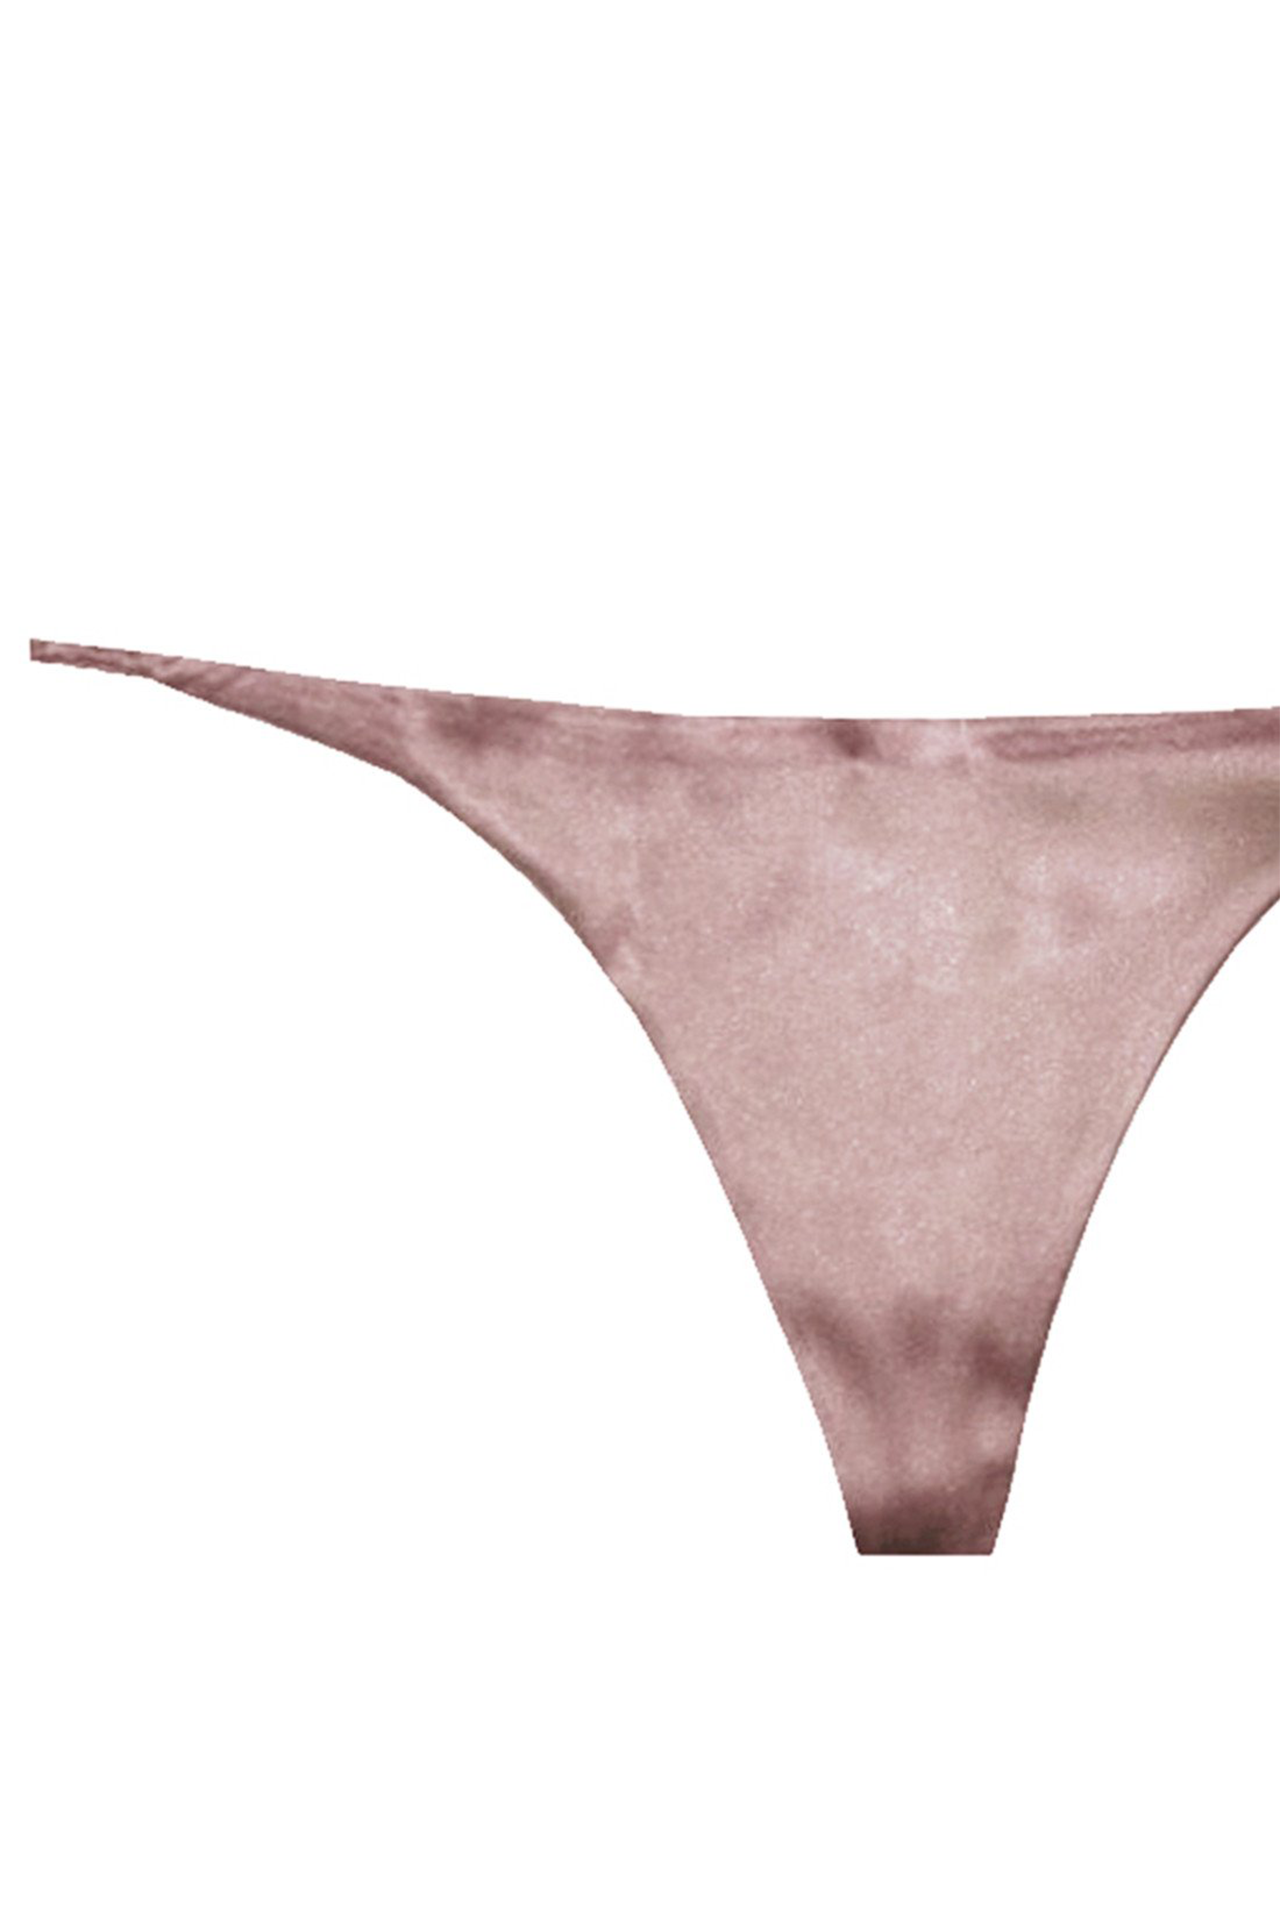 Fleur du Mal, Crystal Luxe V string, Silk underwear, Y2K trend